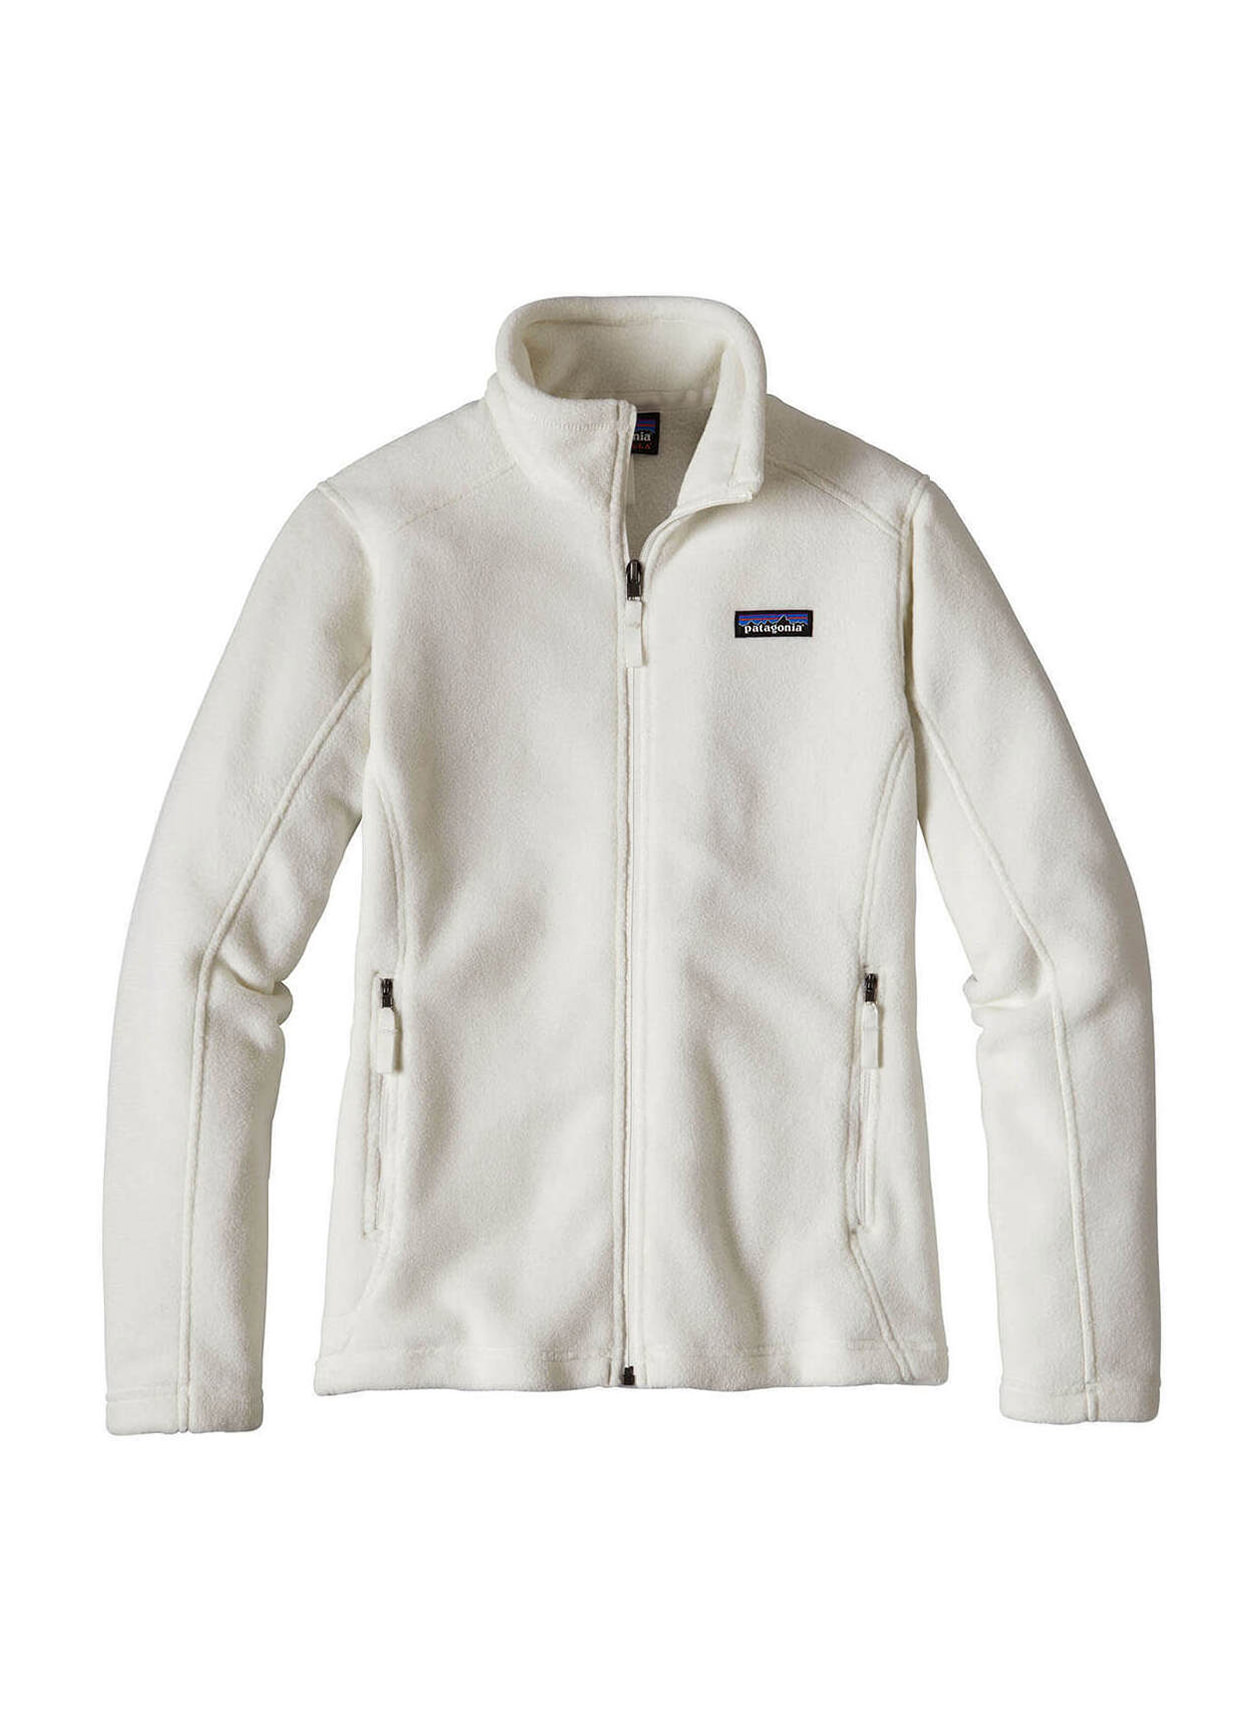 Patagonia Women's Birch White Classic Synch Jacket